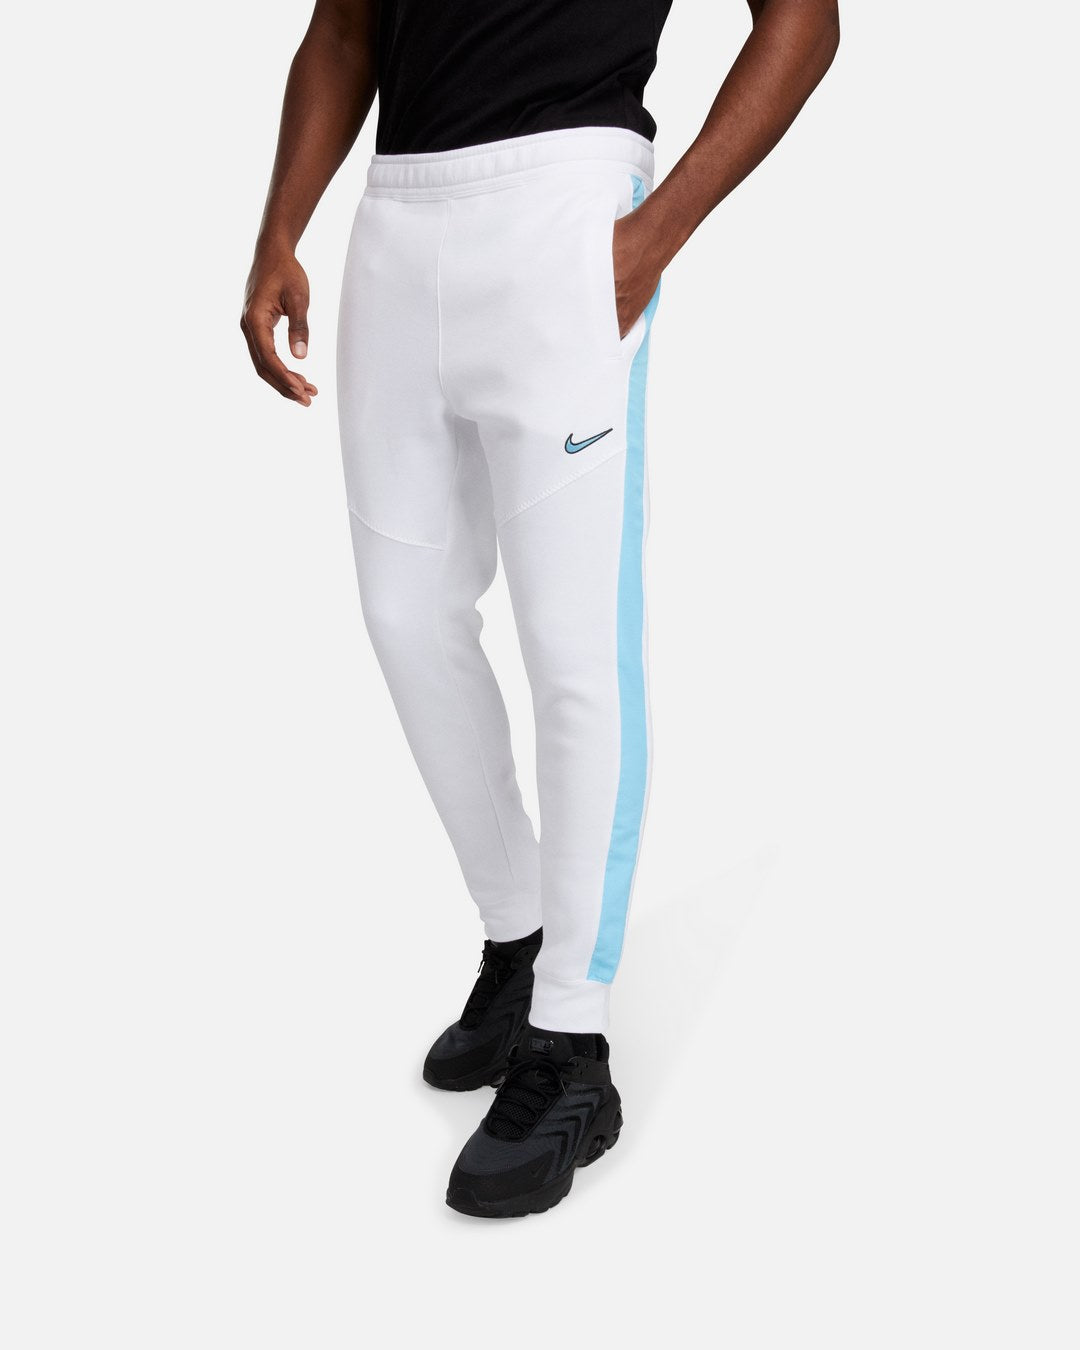 Pantalon Nike Sportswear - Weiß/Blau